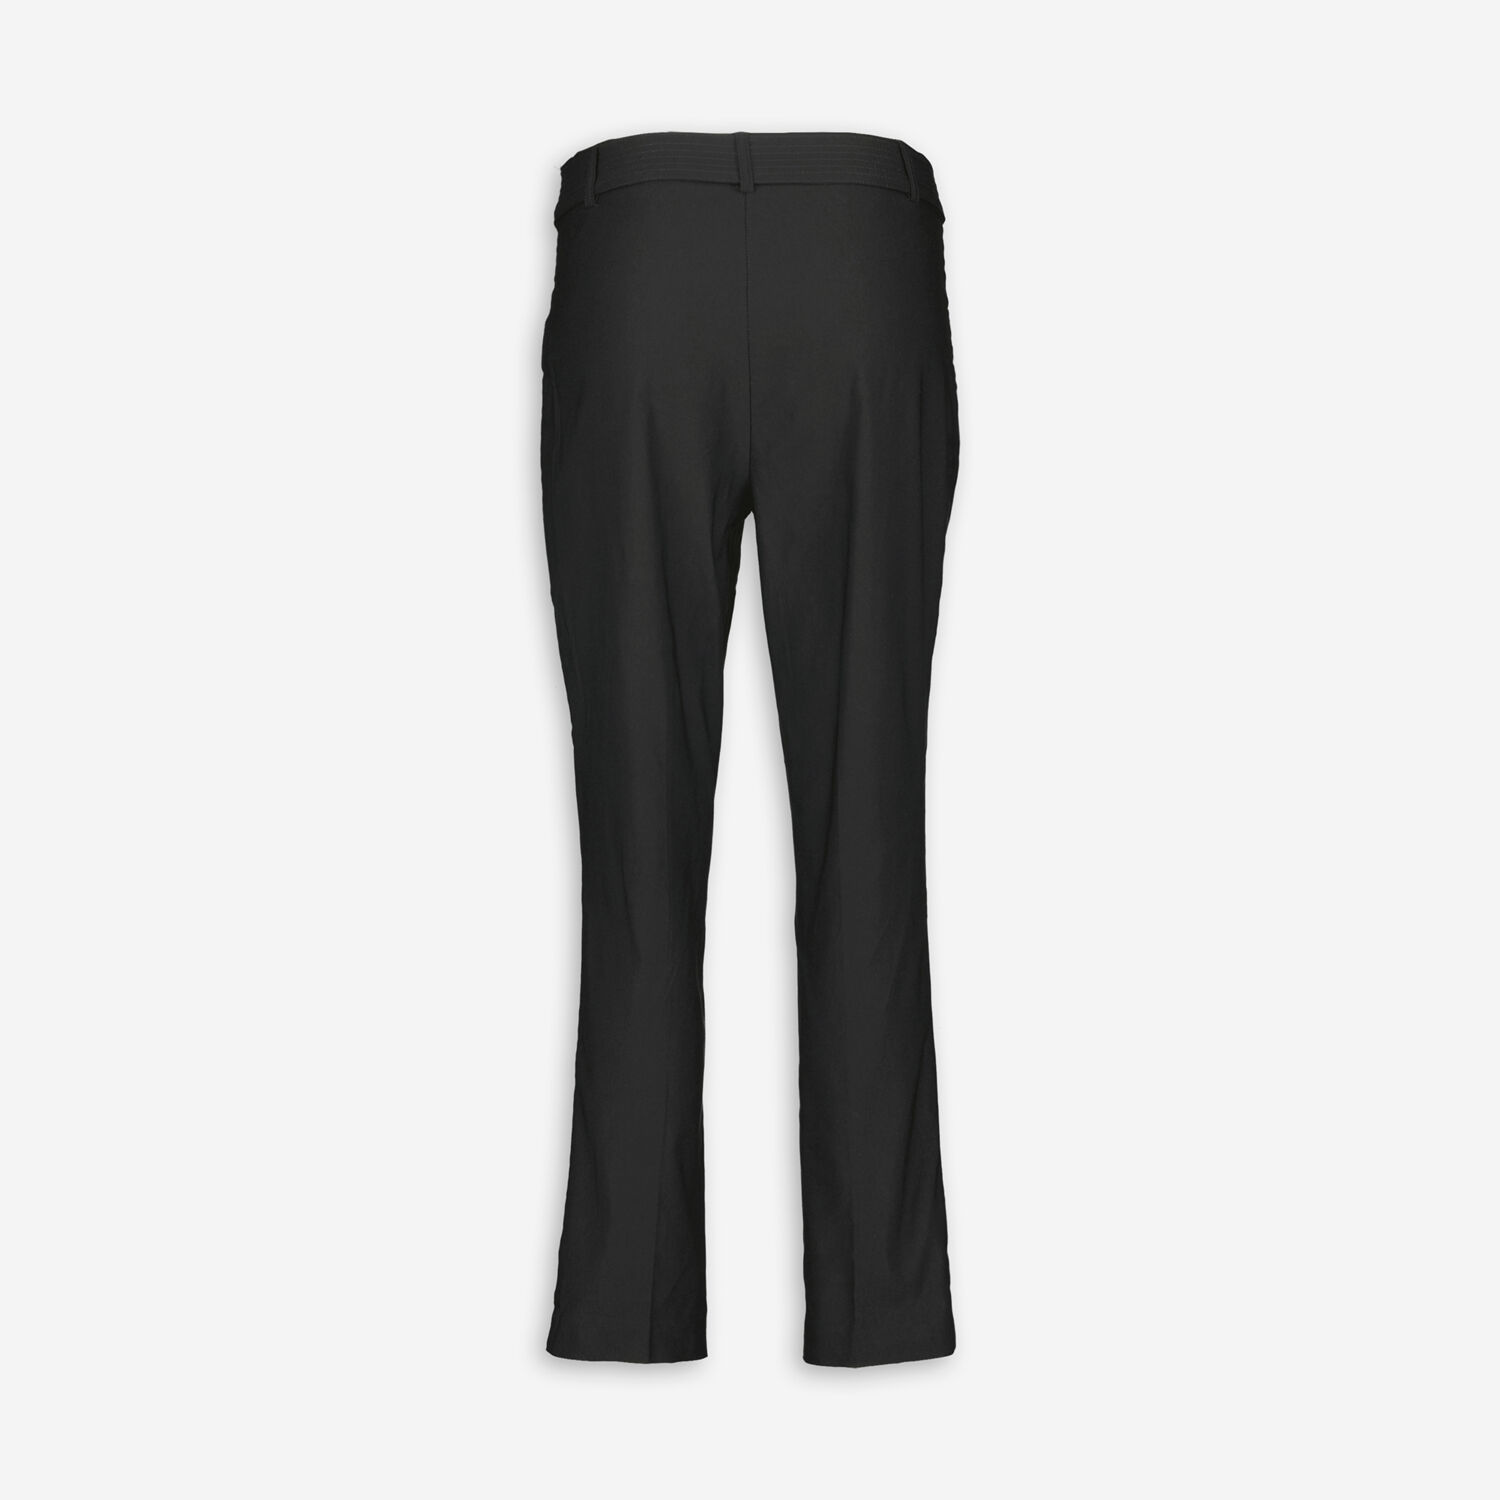 Black Belted Stretch Trousers - TK Maxx UK